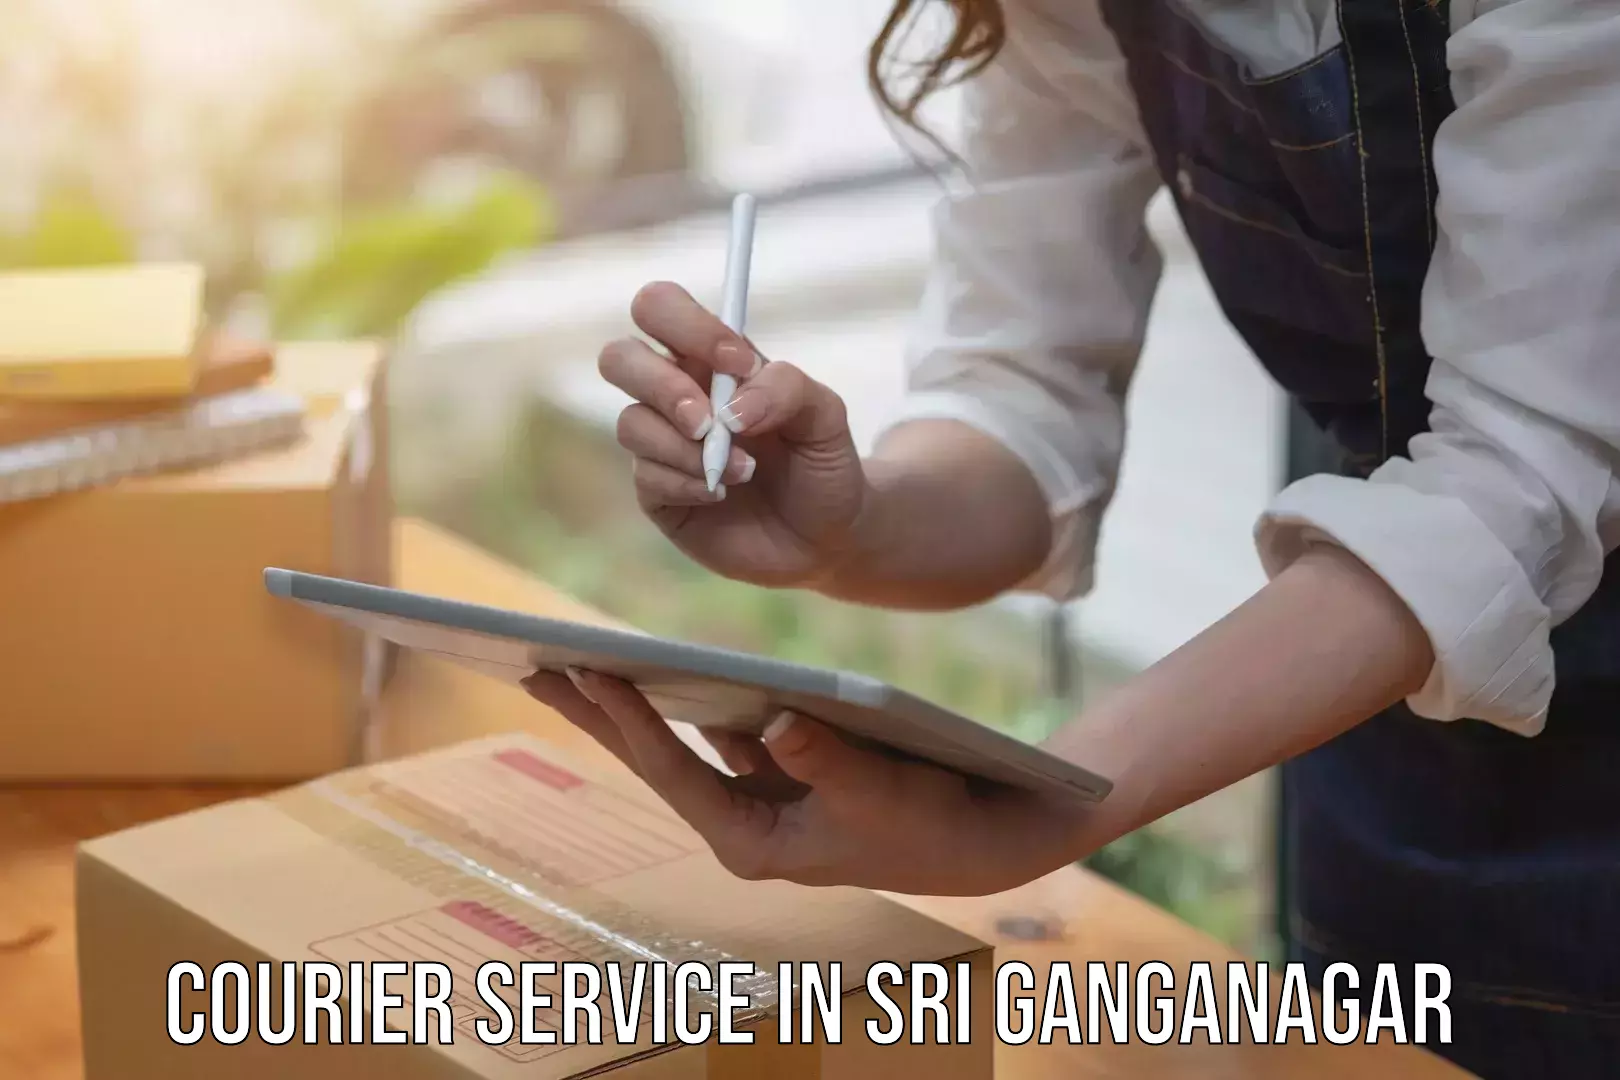 Modern delivery methods in Sri Ganganagar